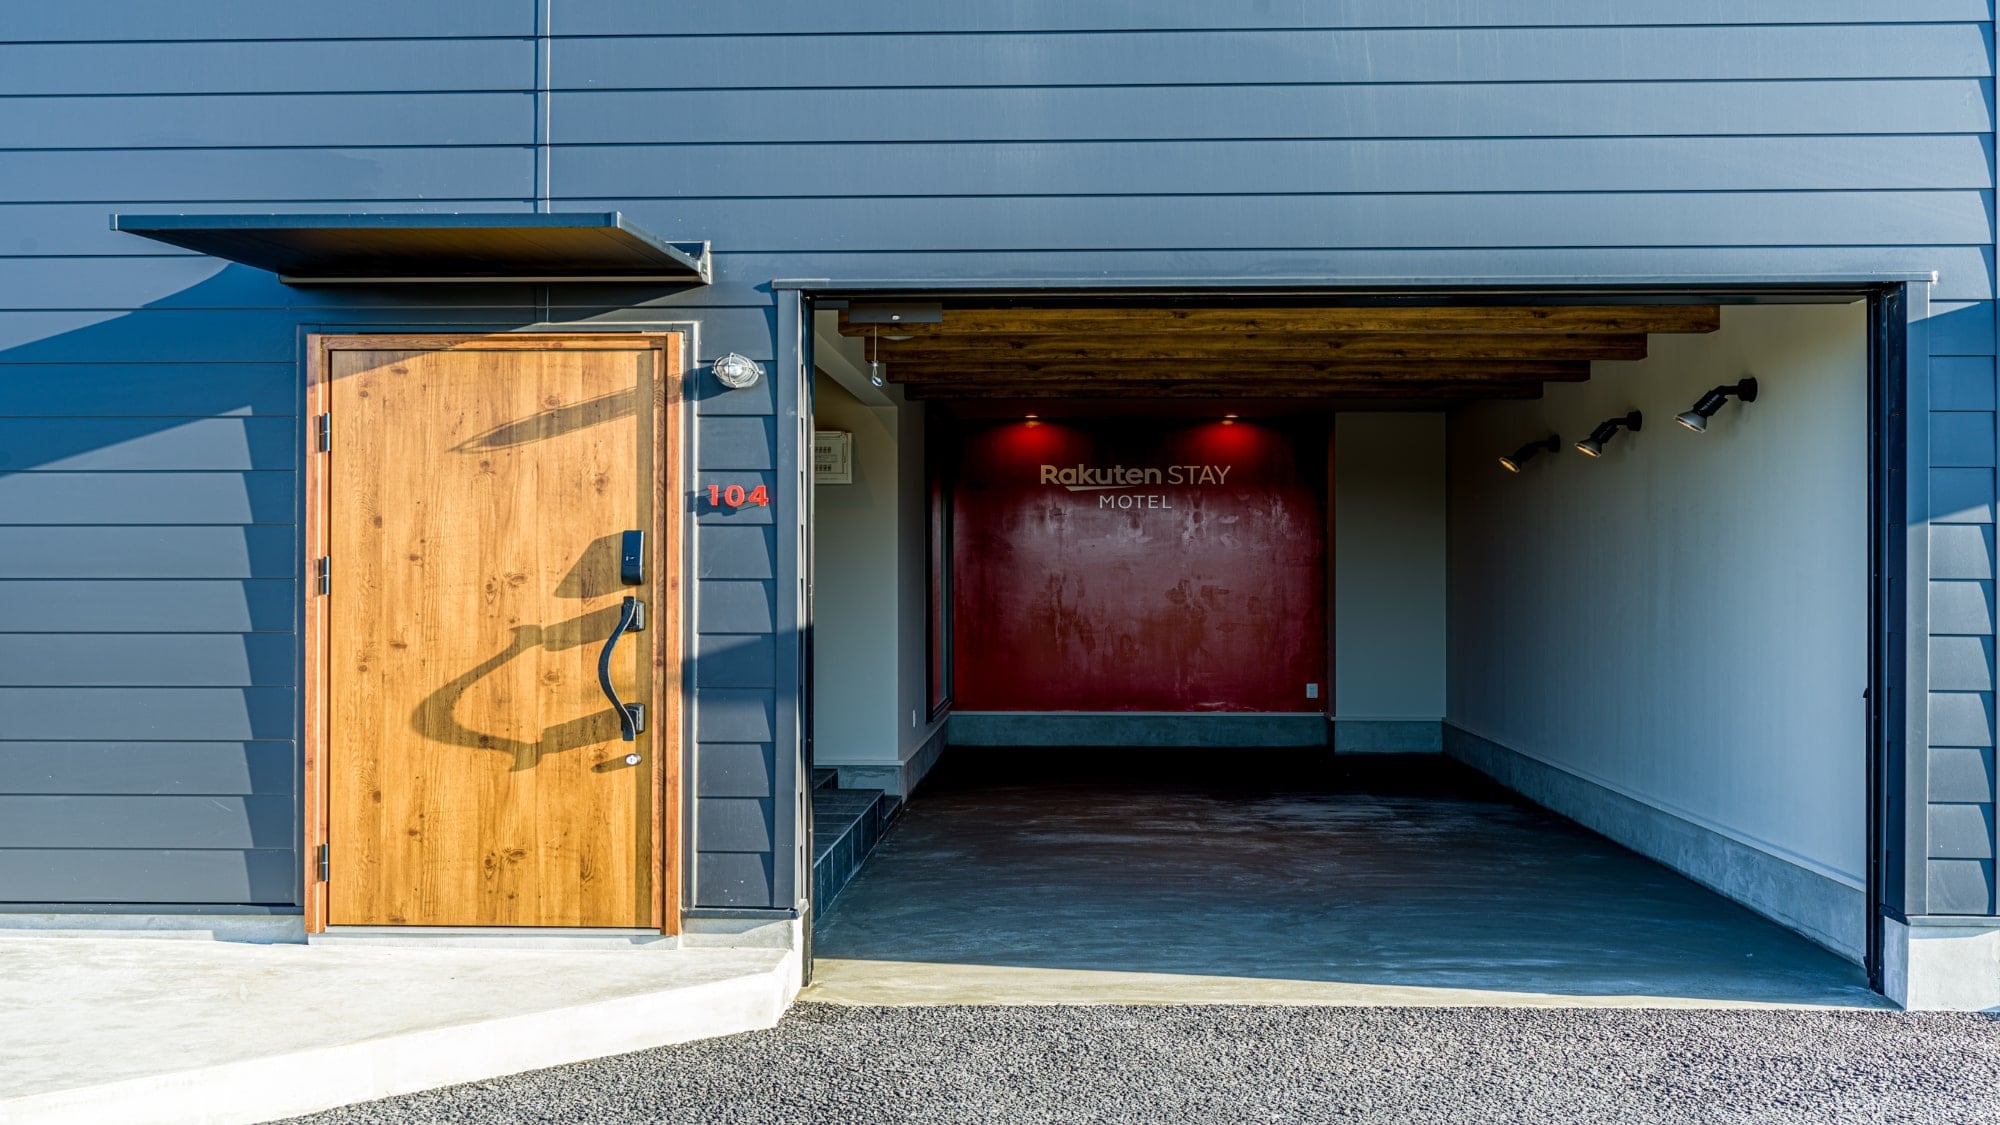 * Built-in garage garage concept room